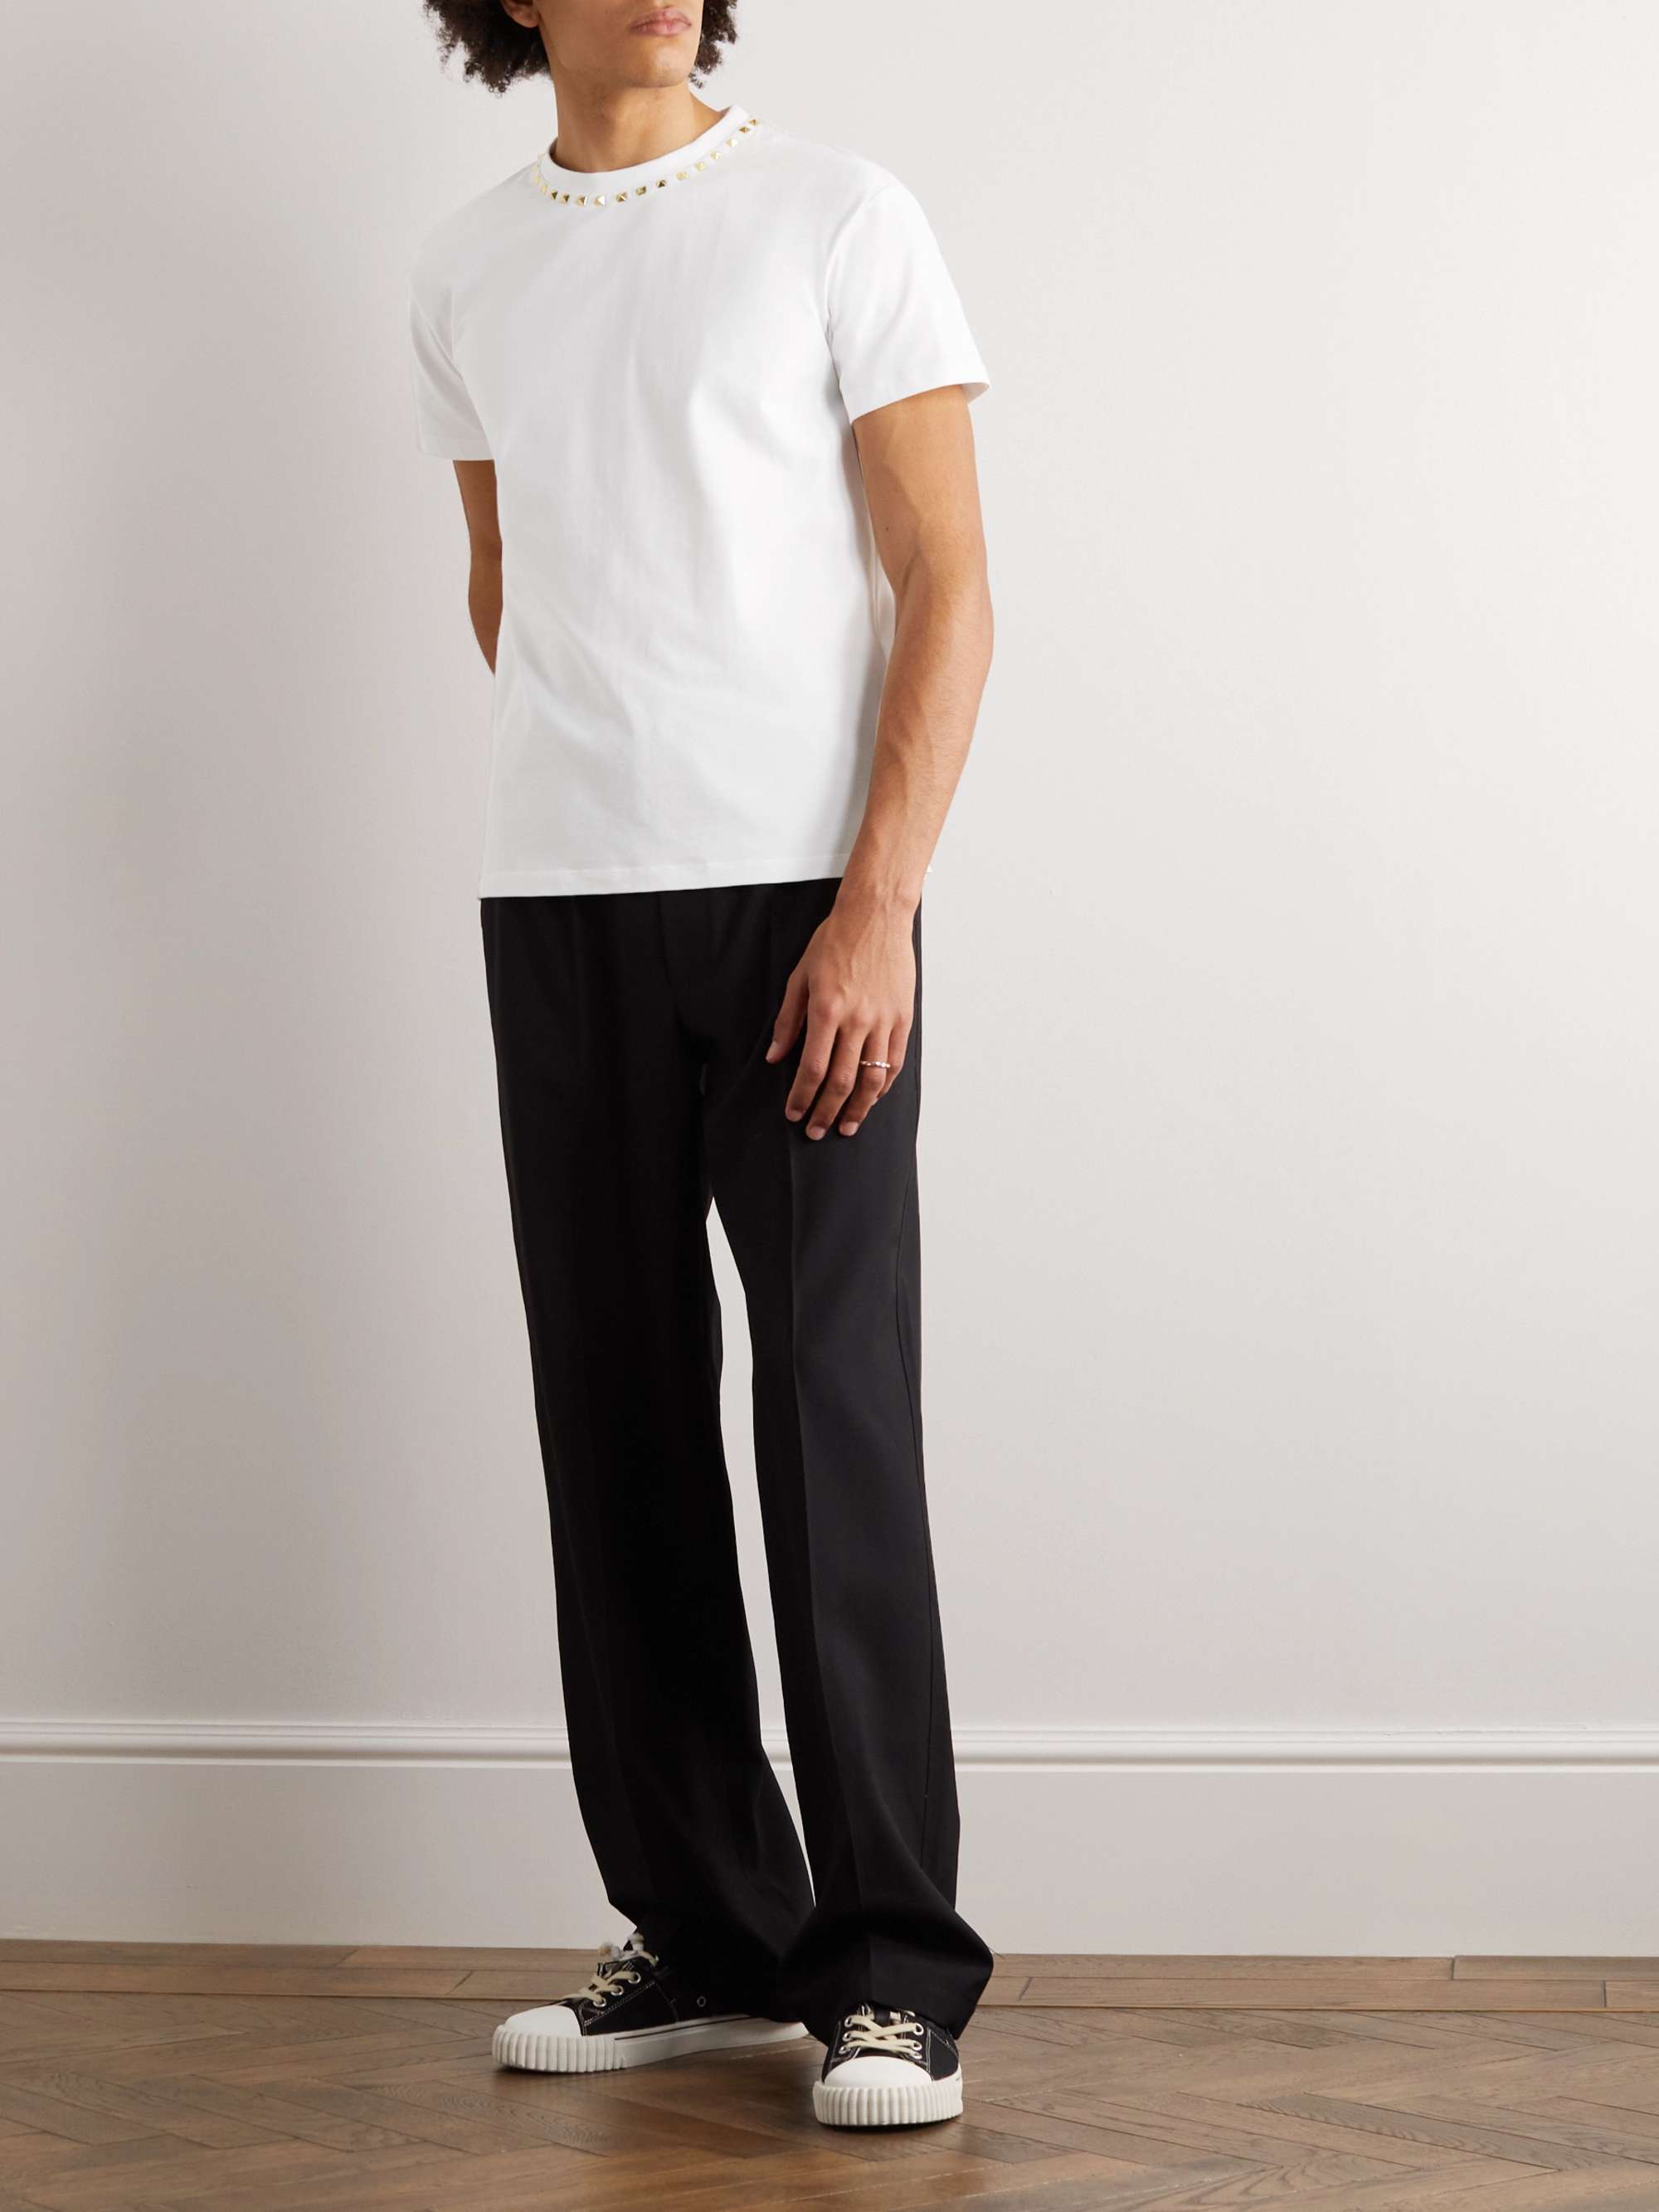 VALENTINO GARAVANI Rockstud Embellished Cotton-Jersey T-Shirt for Men ...